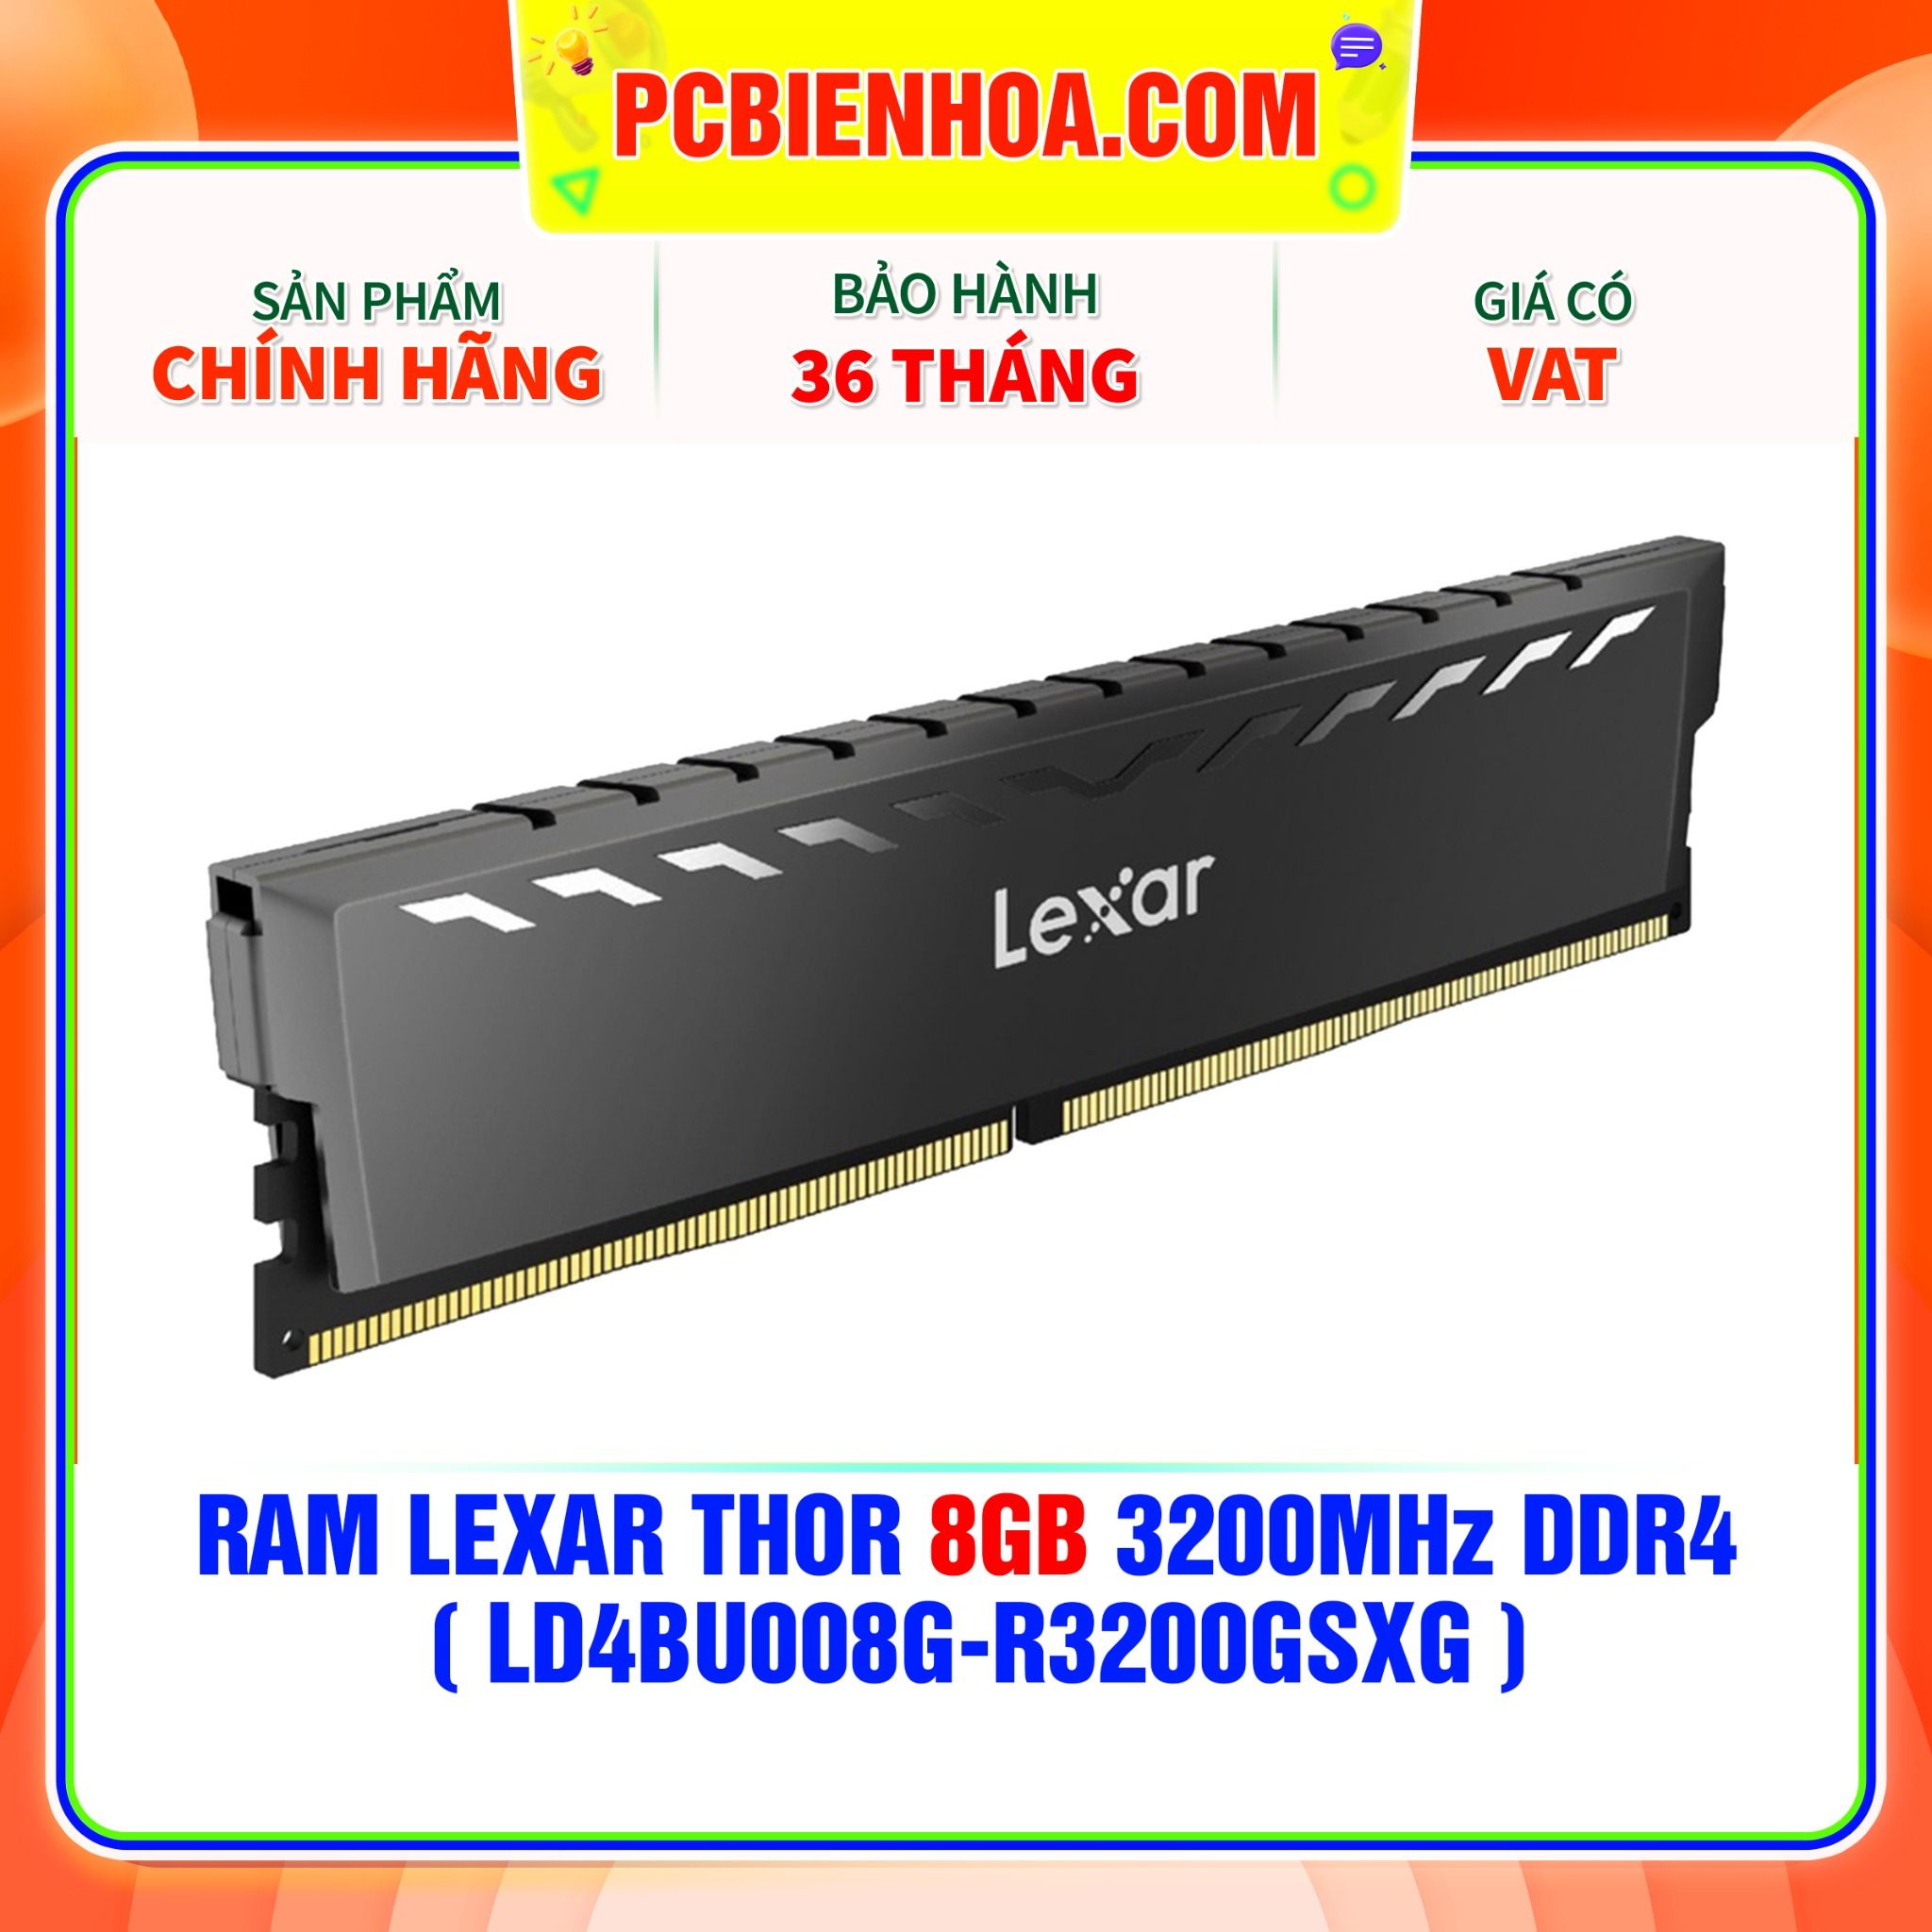  RAM LEXAR THOR 8GB 3200MHz DDR4 UDIMM ( LD4BU008G-R3200GSXG ) 